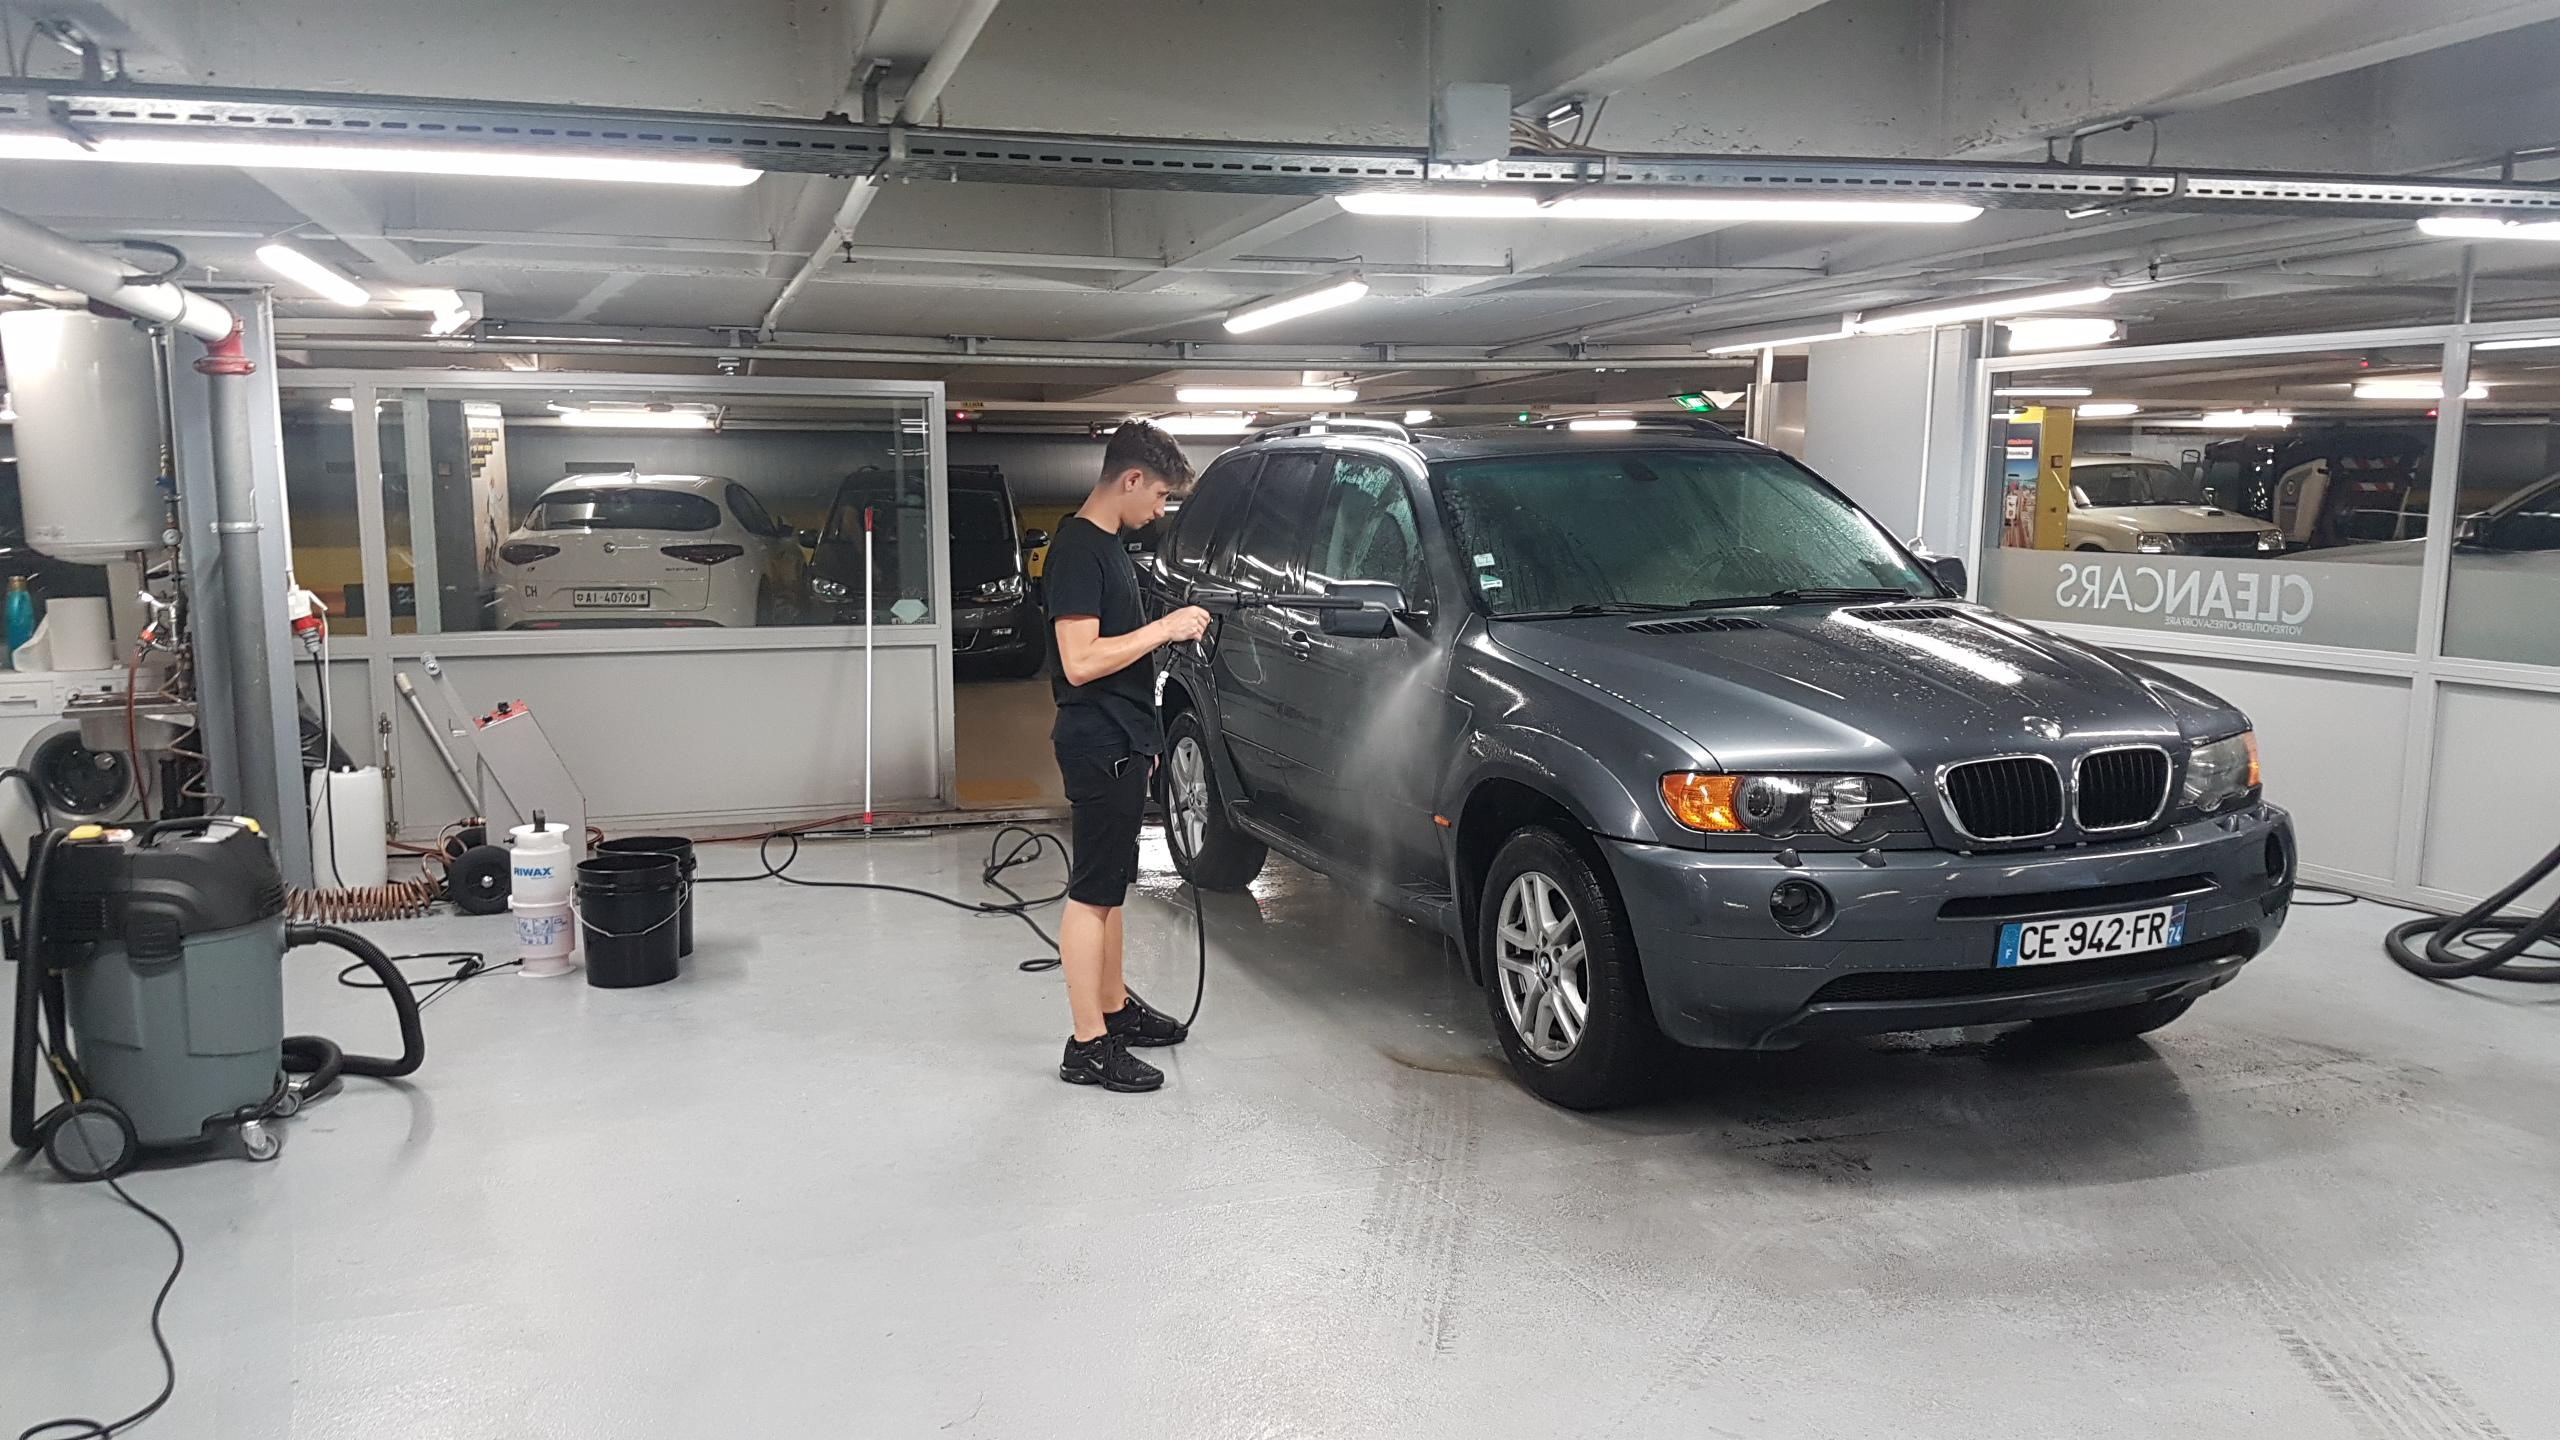 Manual washing of vehicle in parking garage underground garage